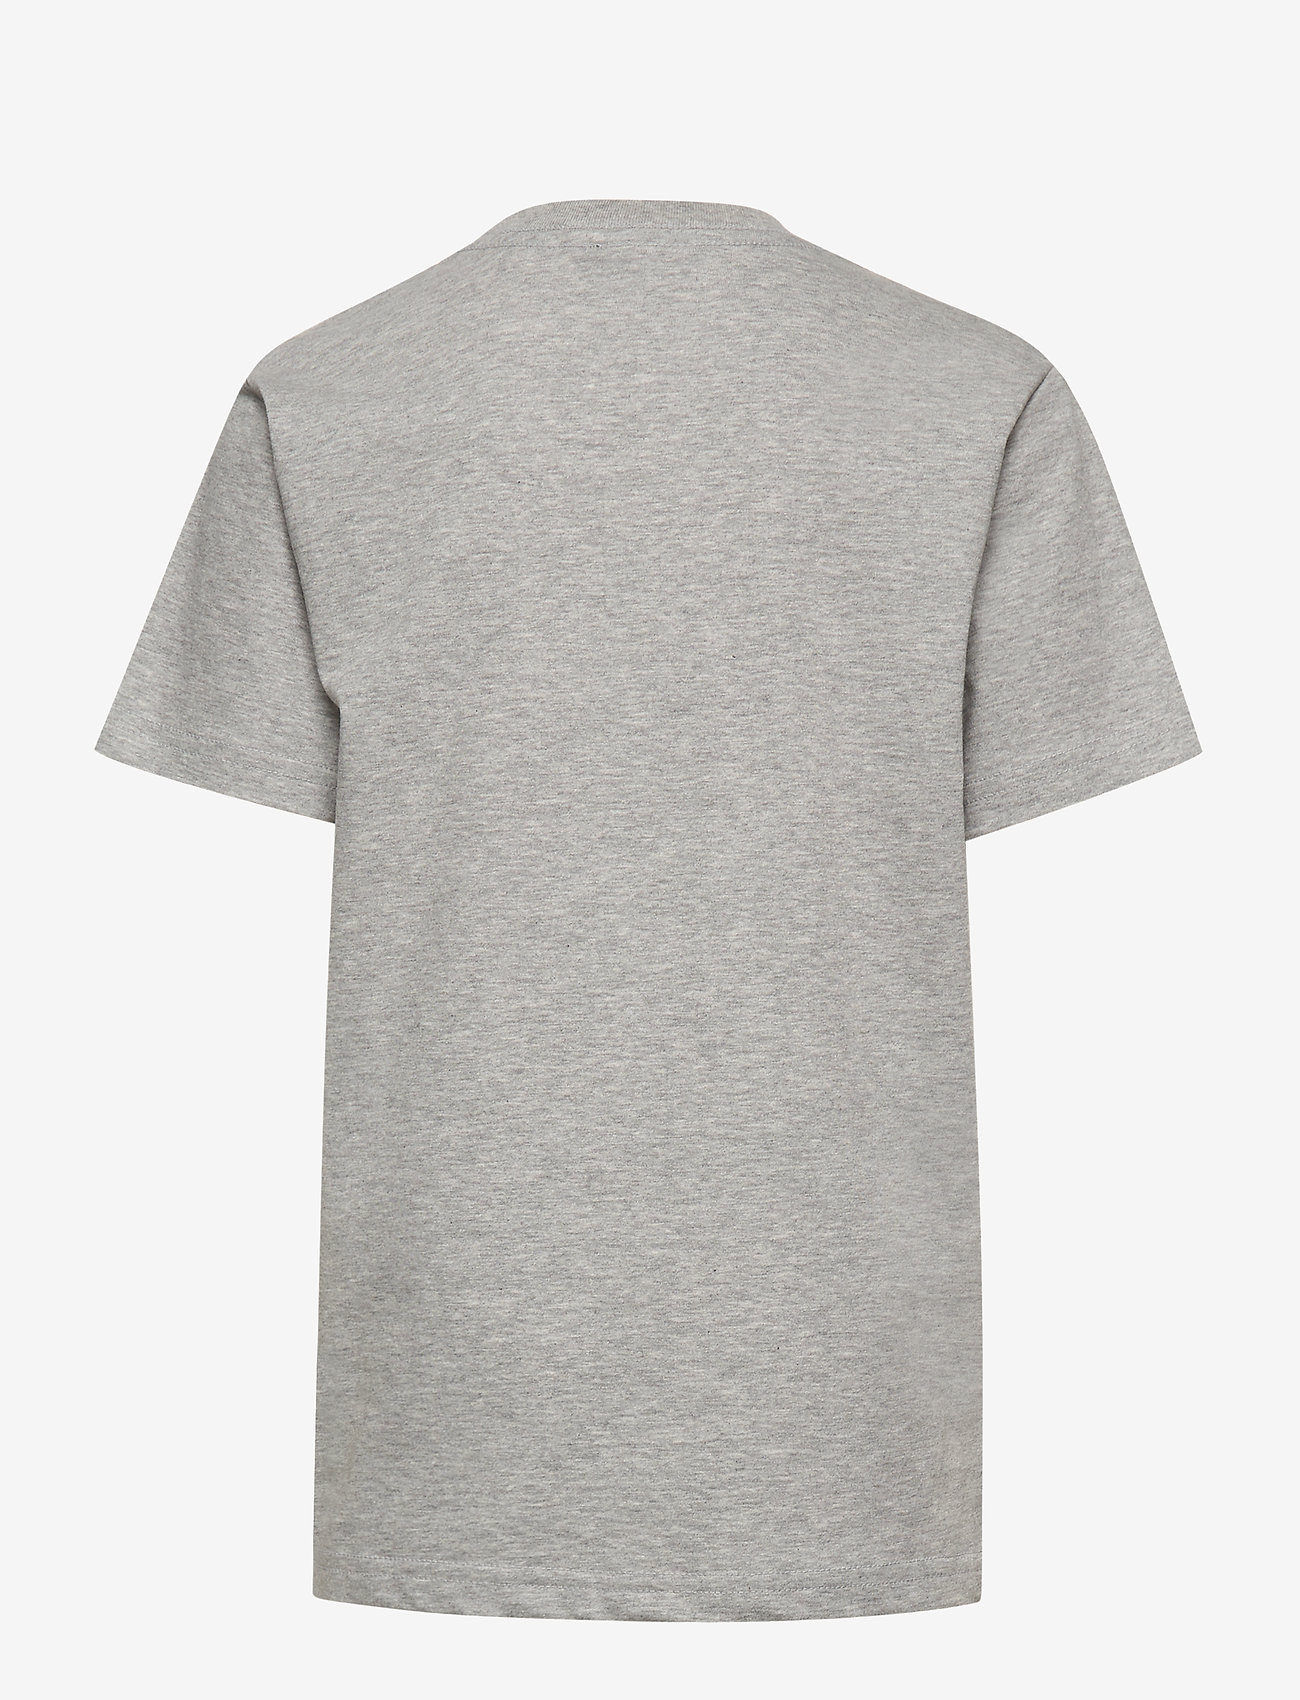 Diesel - TJUSTLOGO T-SHIRT - t-shirt à manches courtes avec motif - grigio melange nuovo - 1